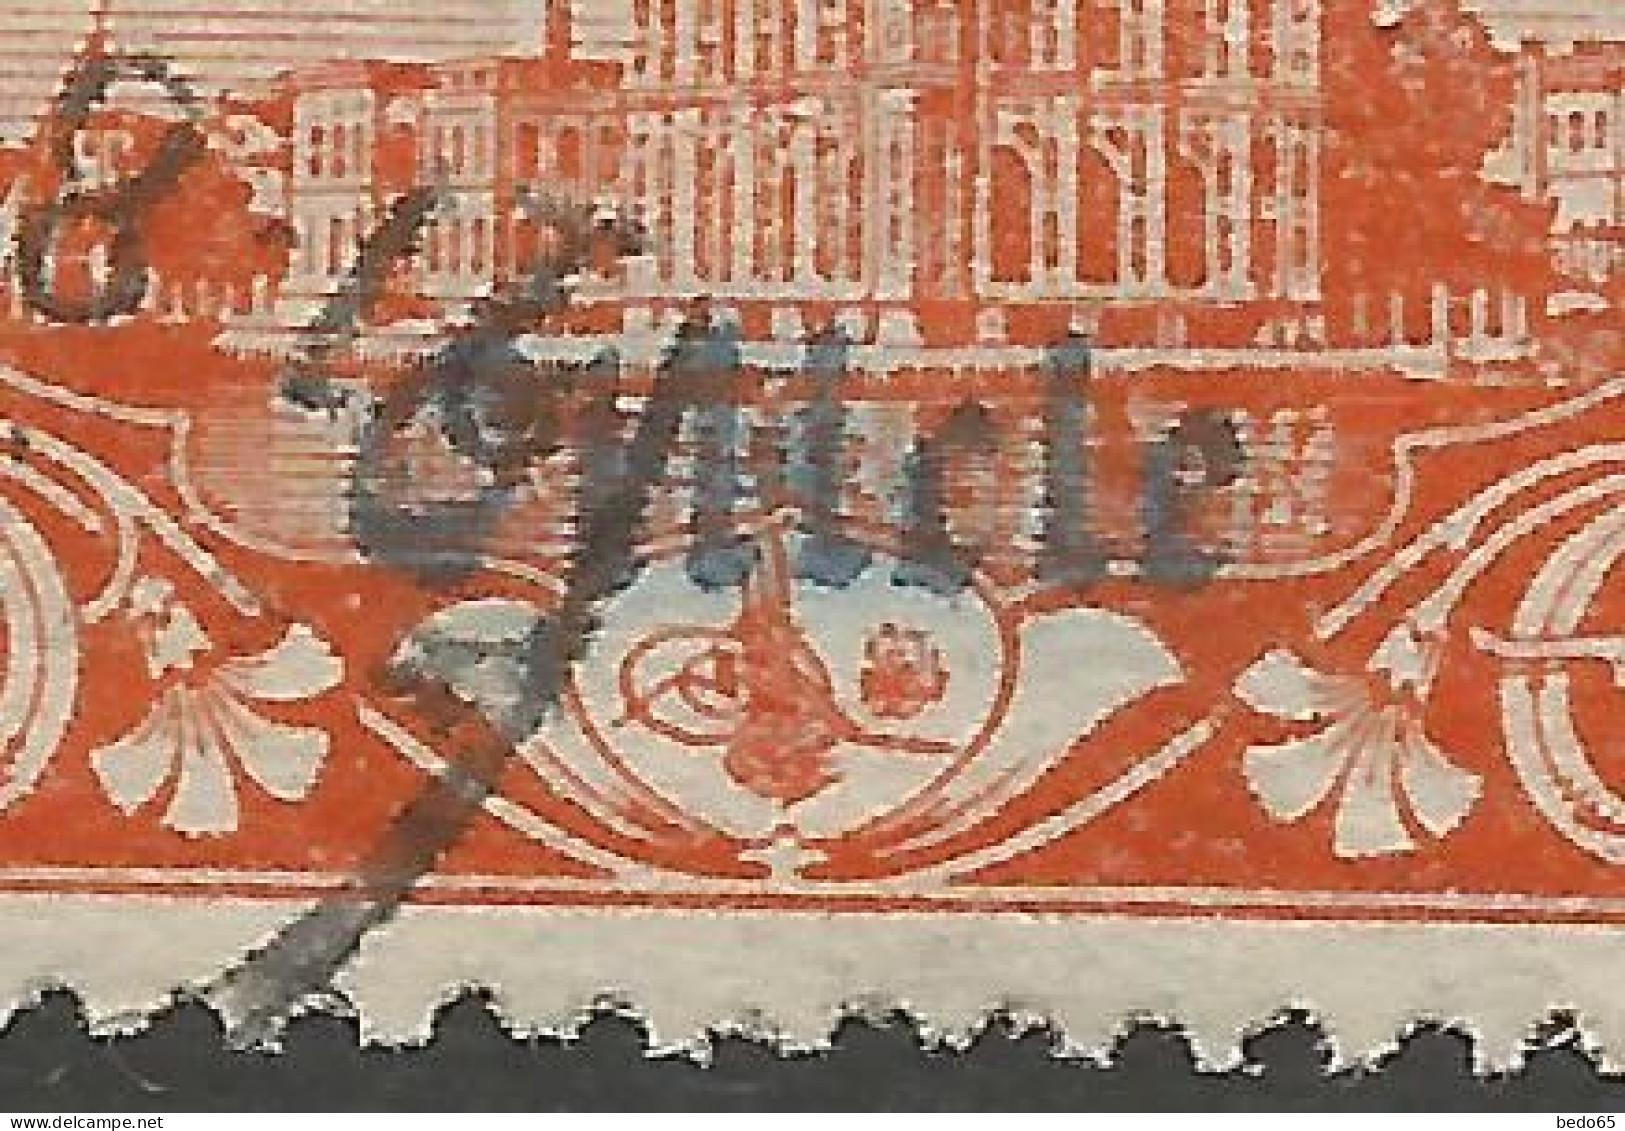 CILICIE N° 60d Cilicle Au Lieu De Cilicie OBL - Used Stamps